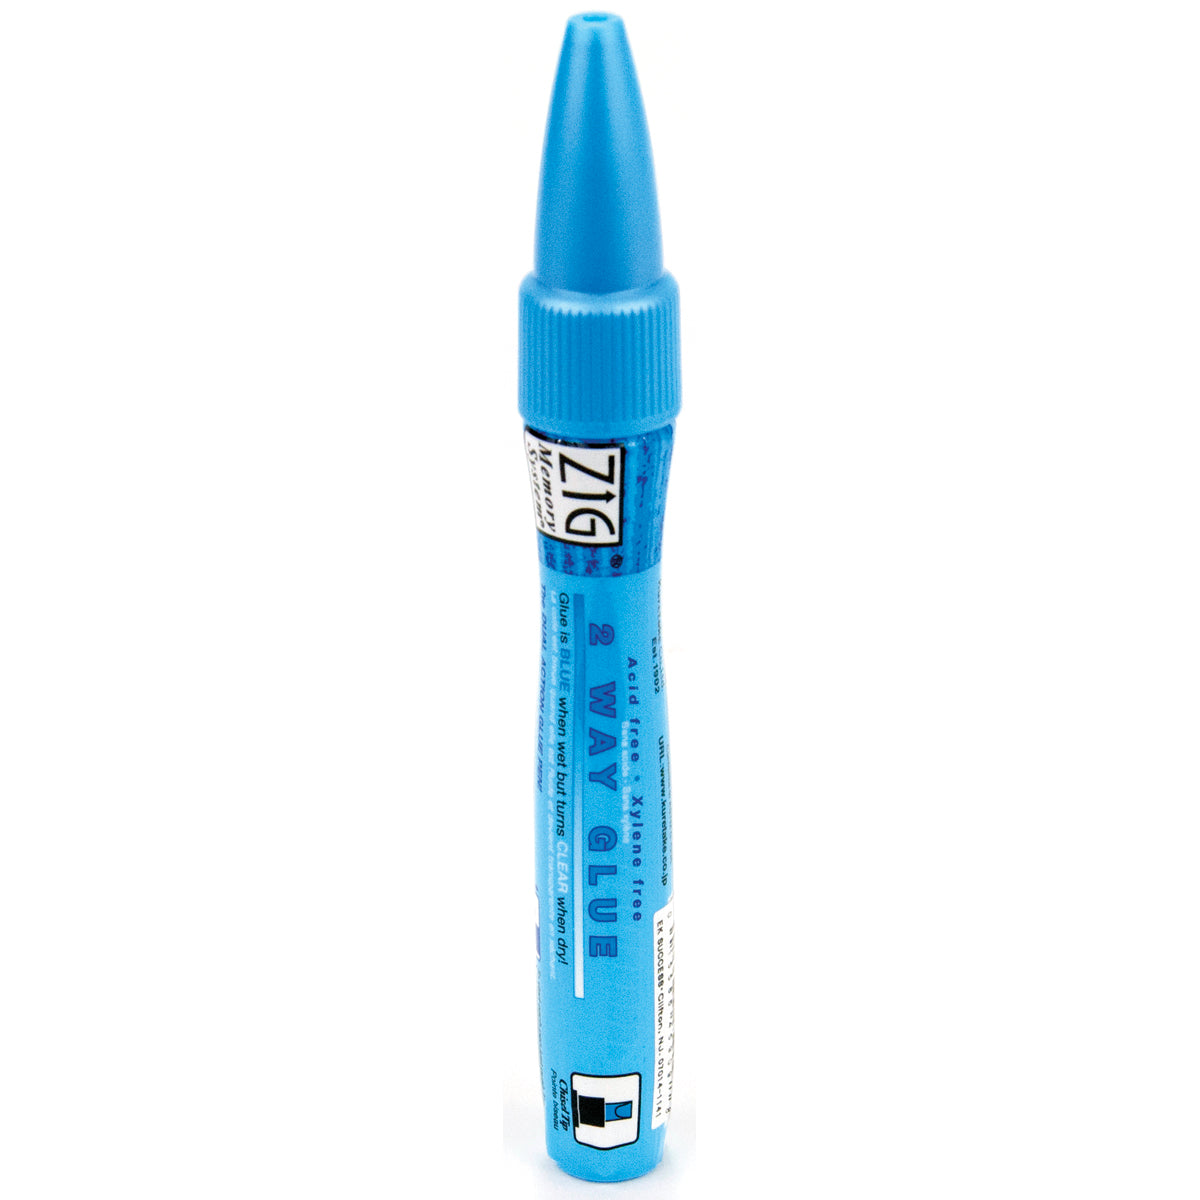 Zig Sticky Thumb 2-Way Glue Pen, Chisel Tip, 0.35 Oz Pack of 1 Pen 372878